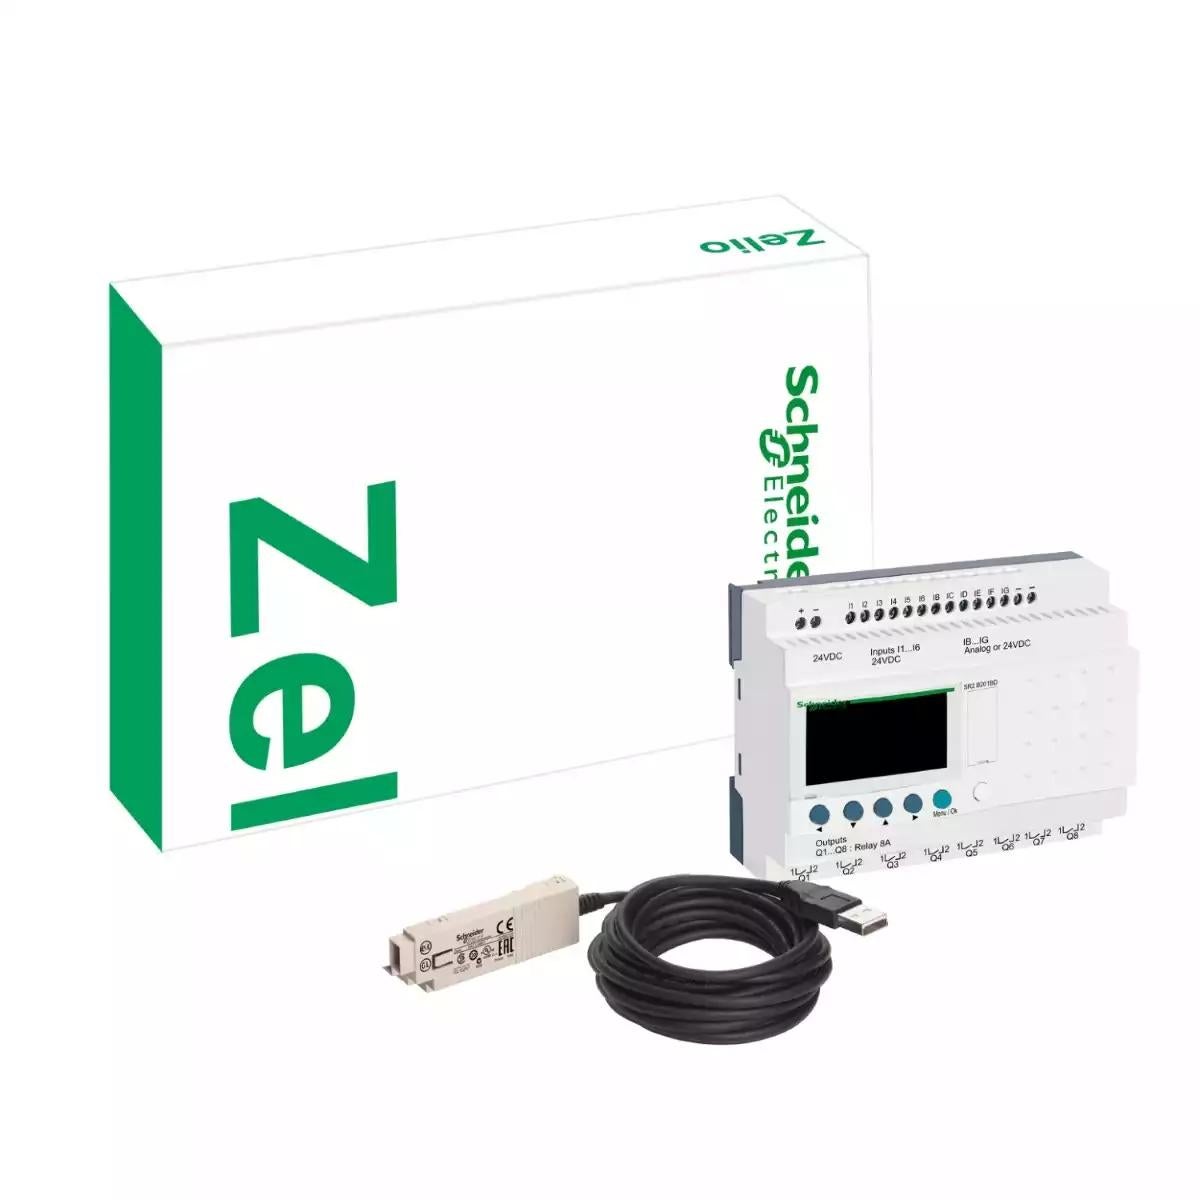 Schneider Electric Zelio Logic compact smart relay - â€œdiscoveryâ€ pack - 20 I O - 24 V DC